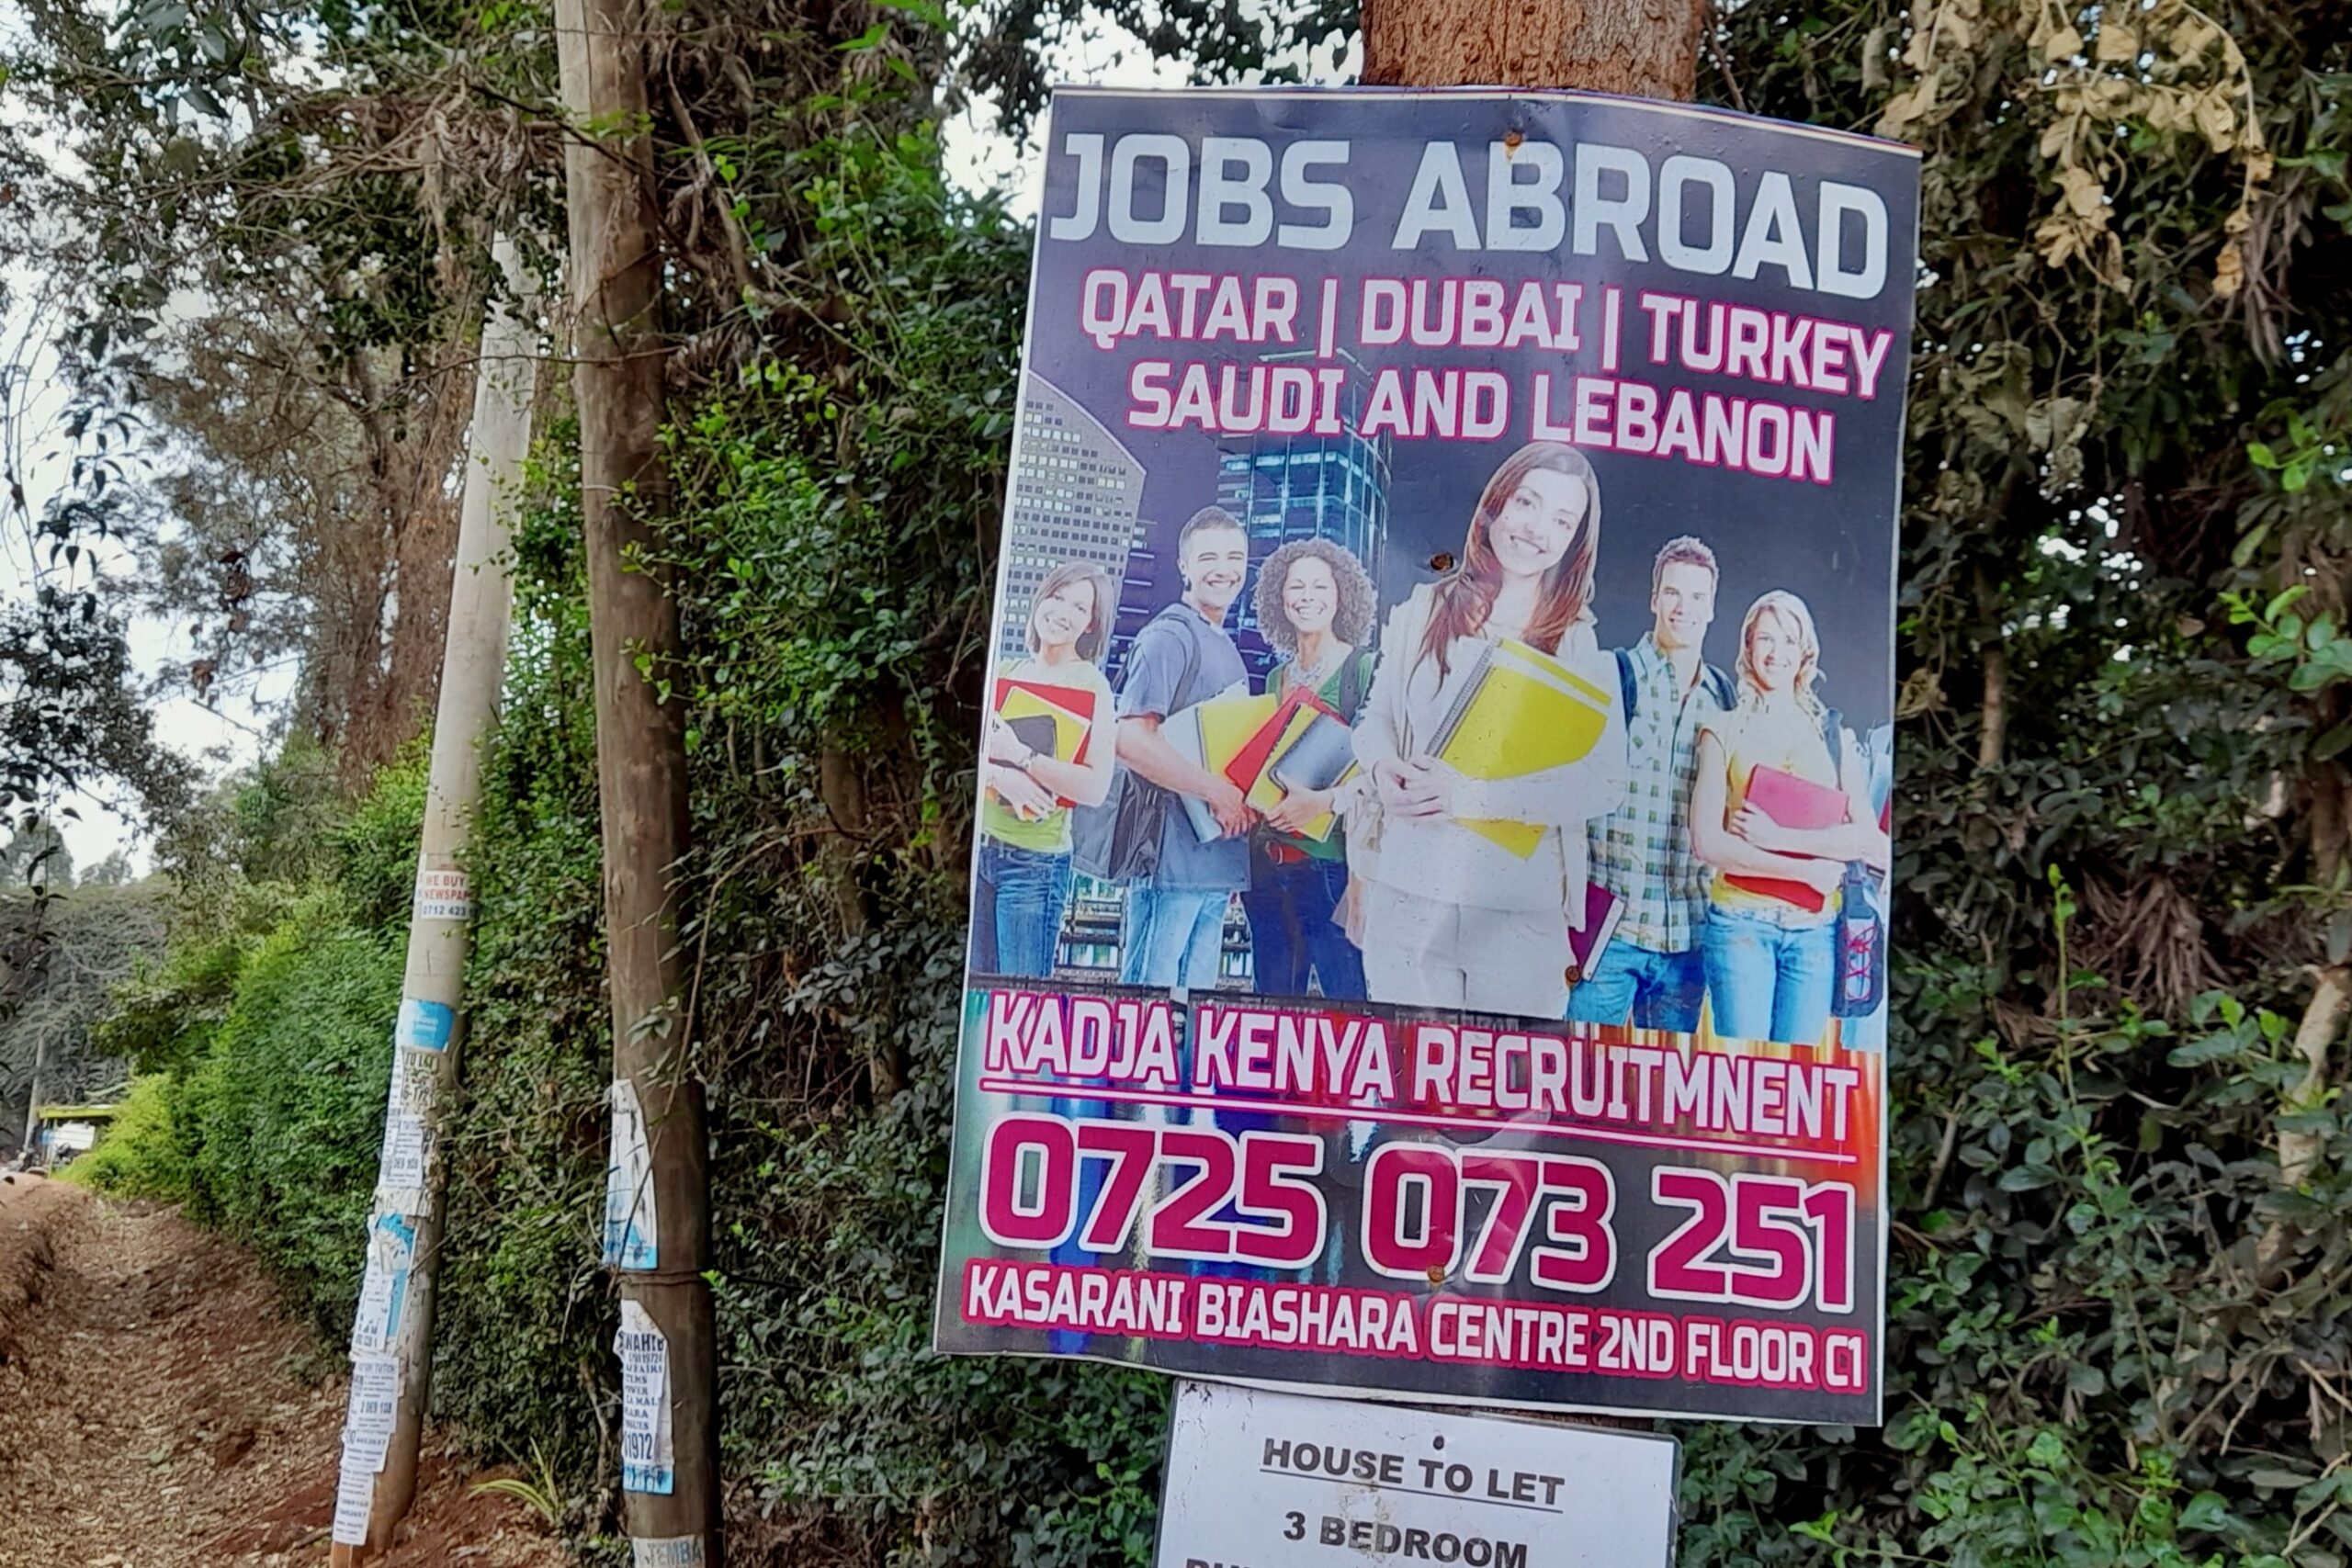 A poster found in Nairobi of Kadja Kenya Recruitment agency, advertising jobs in Qatar, Dubai, Turkey, Saudi and Lebanon. Photo by Ngina Kirori 